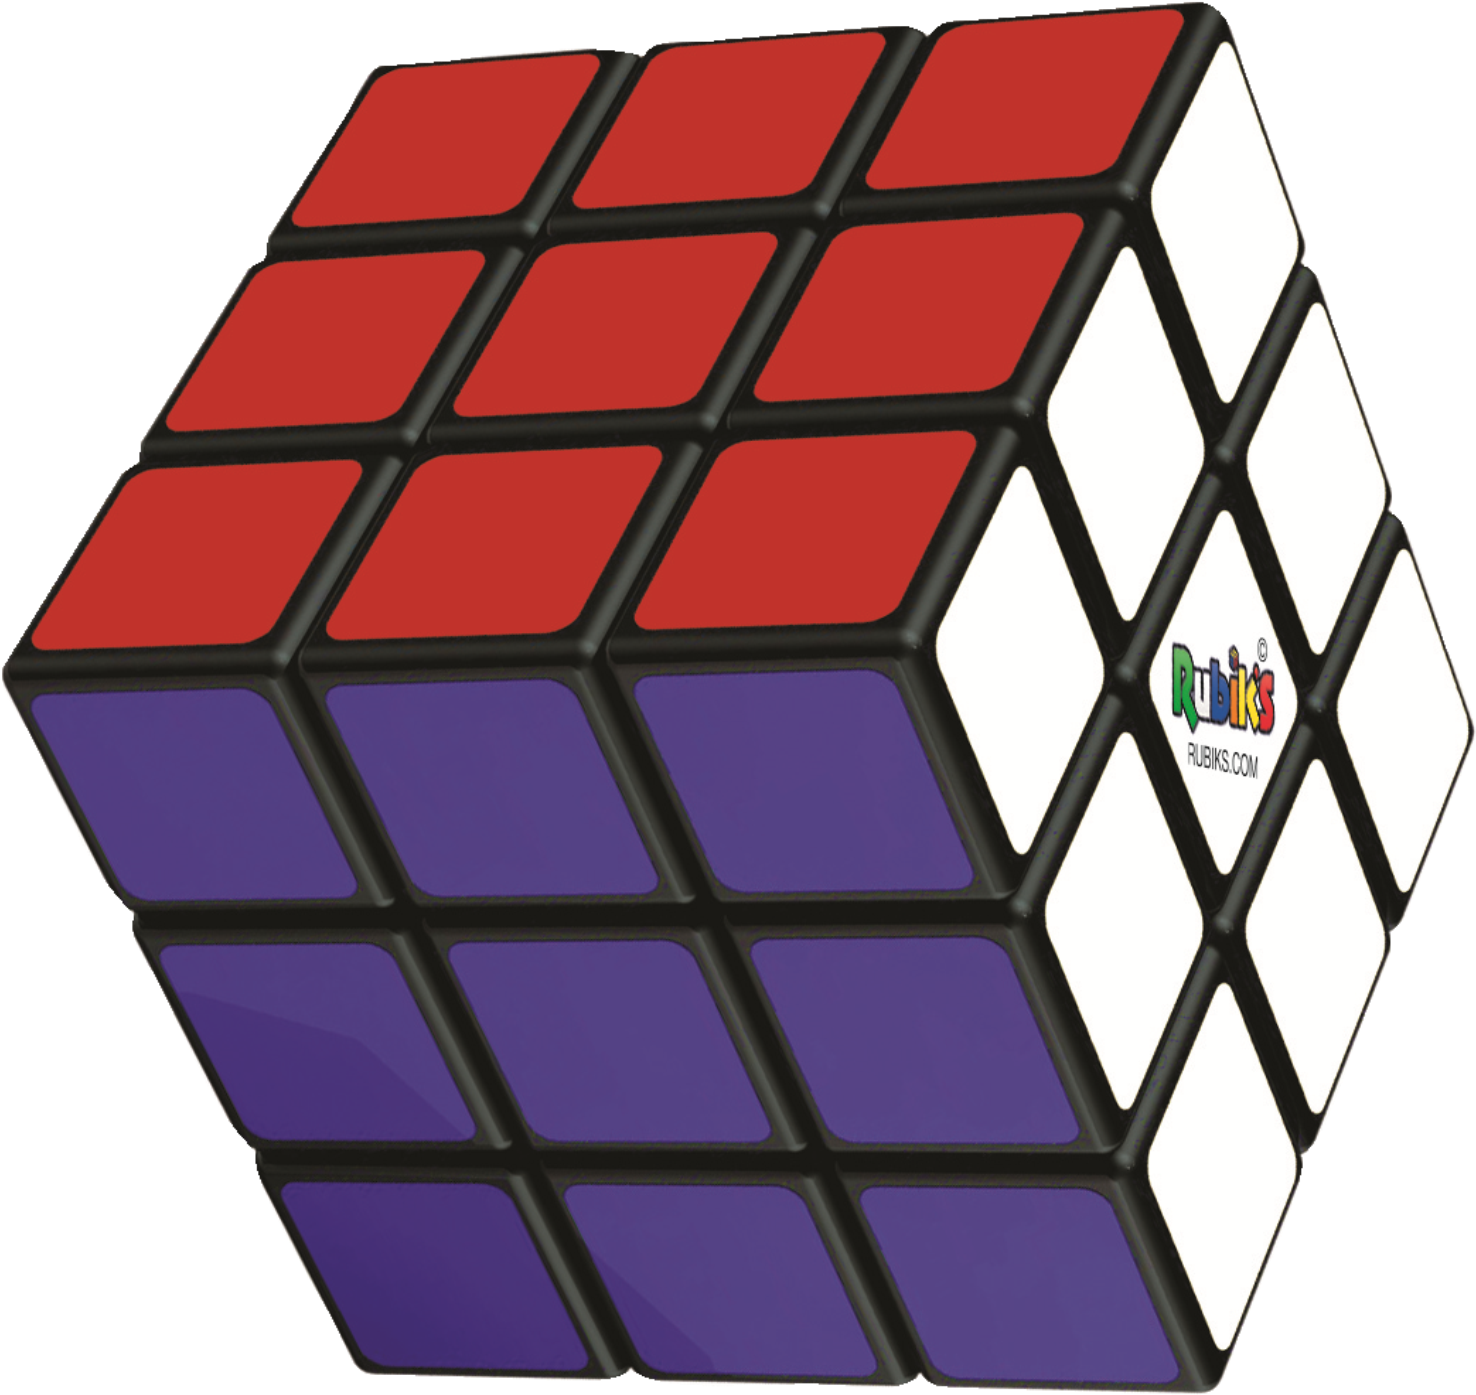 A Close Up Of A Cube